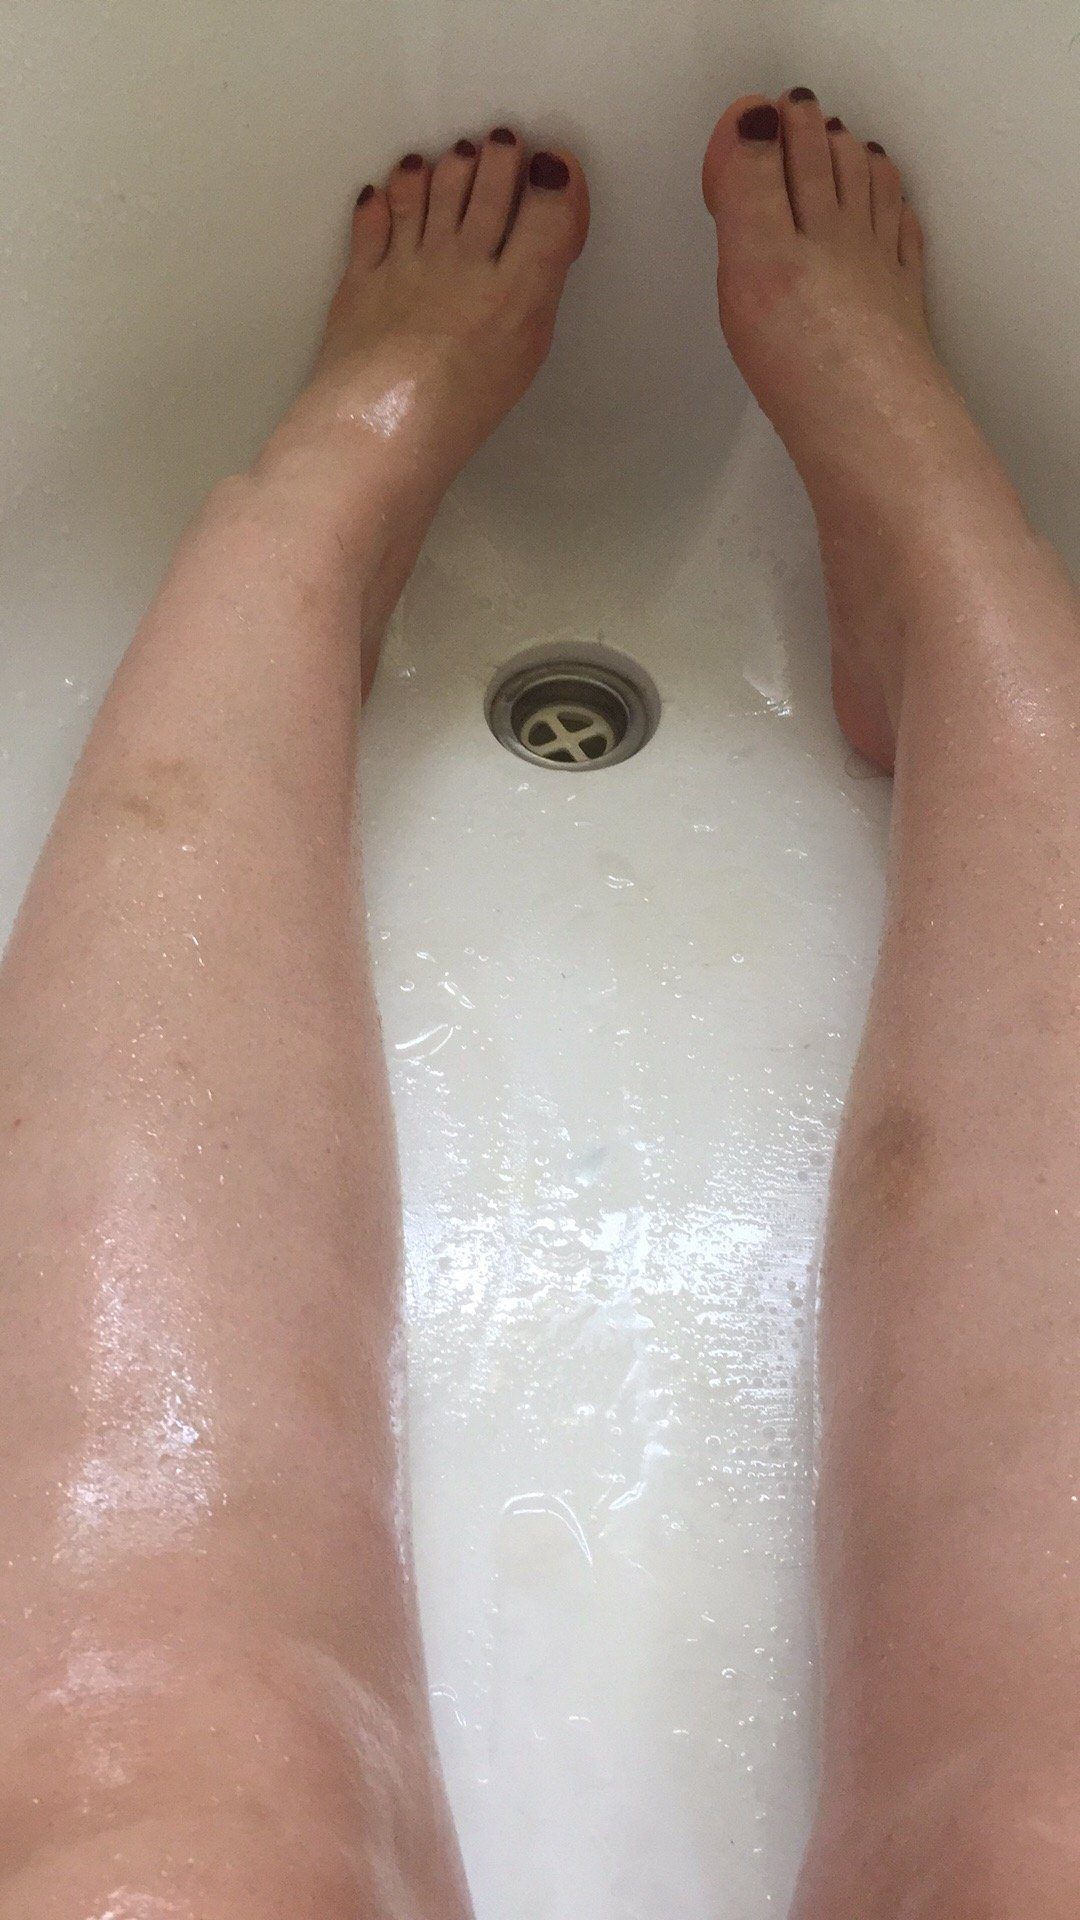 Obese person in bath tub